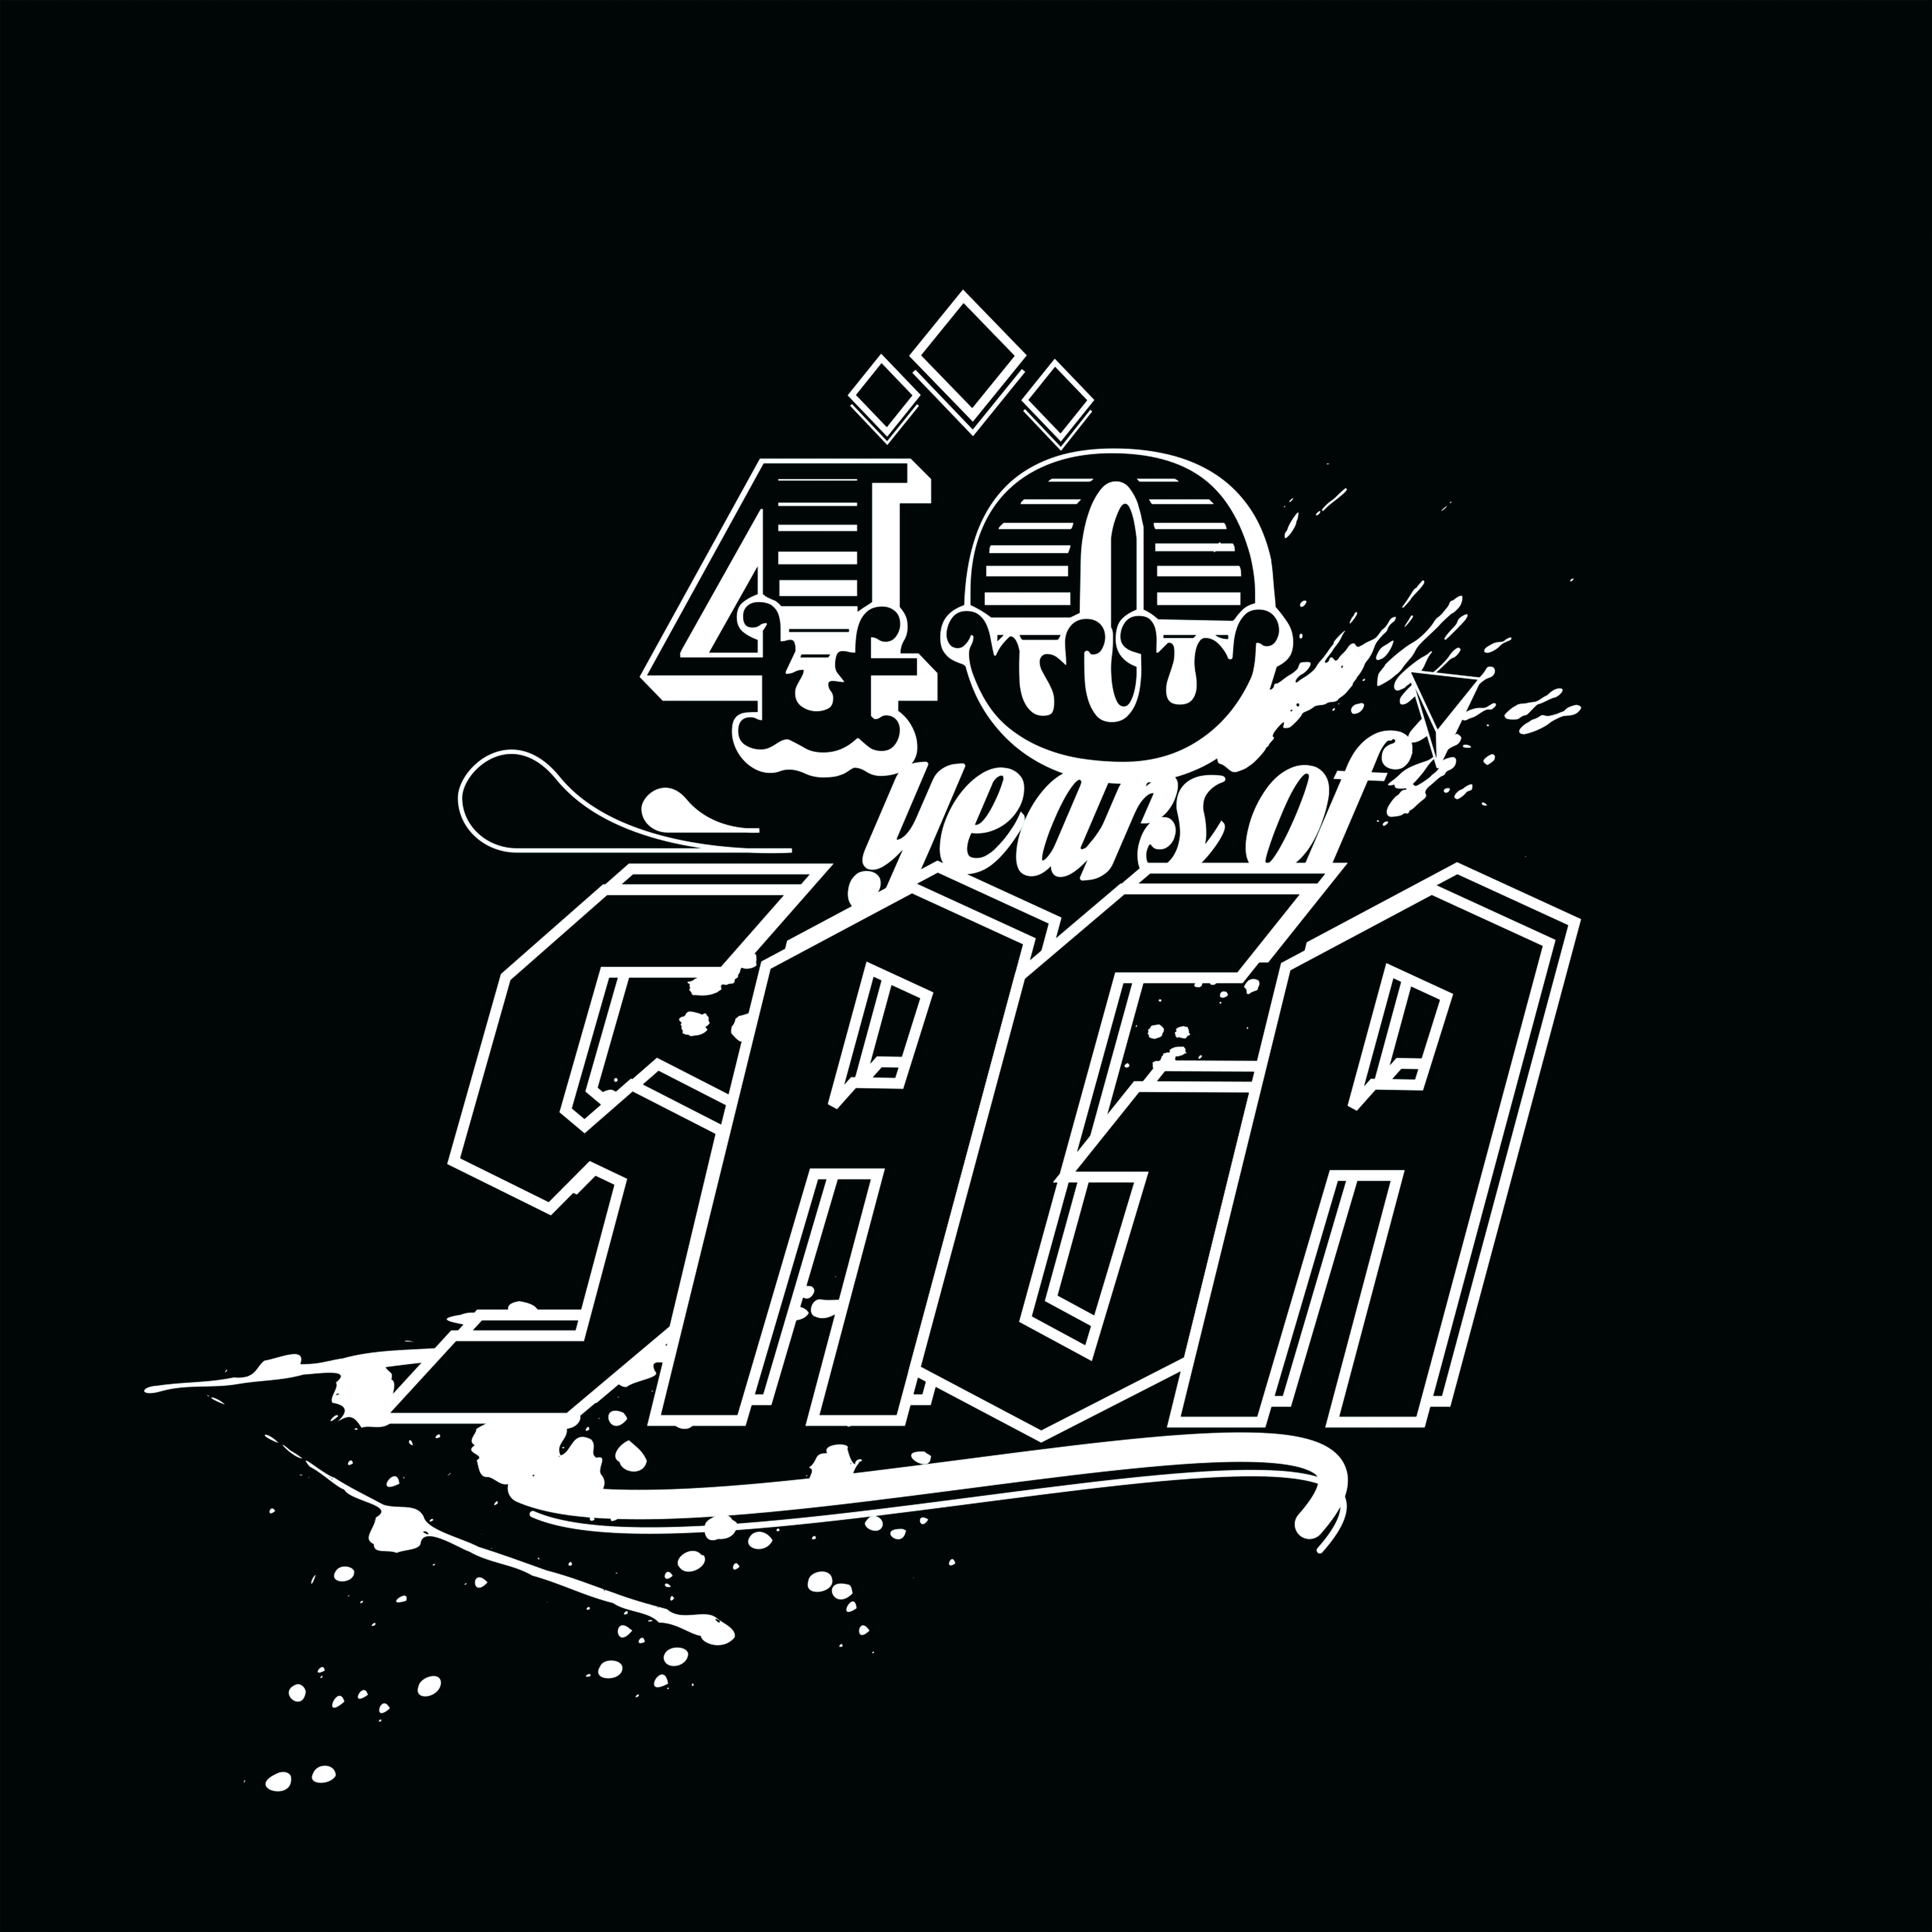 40 Years Of SAGA